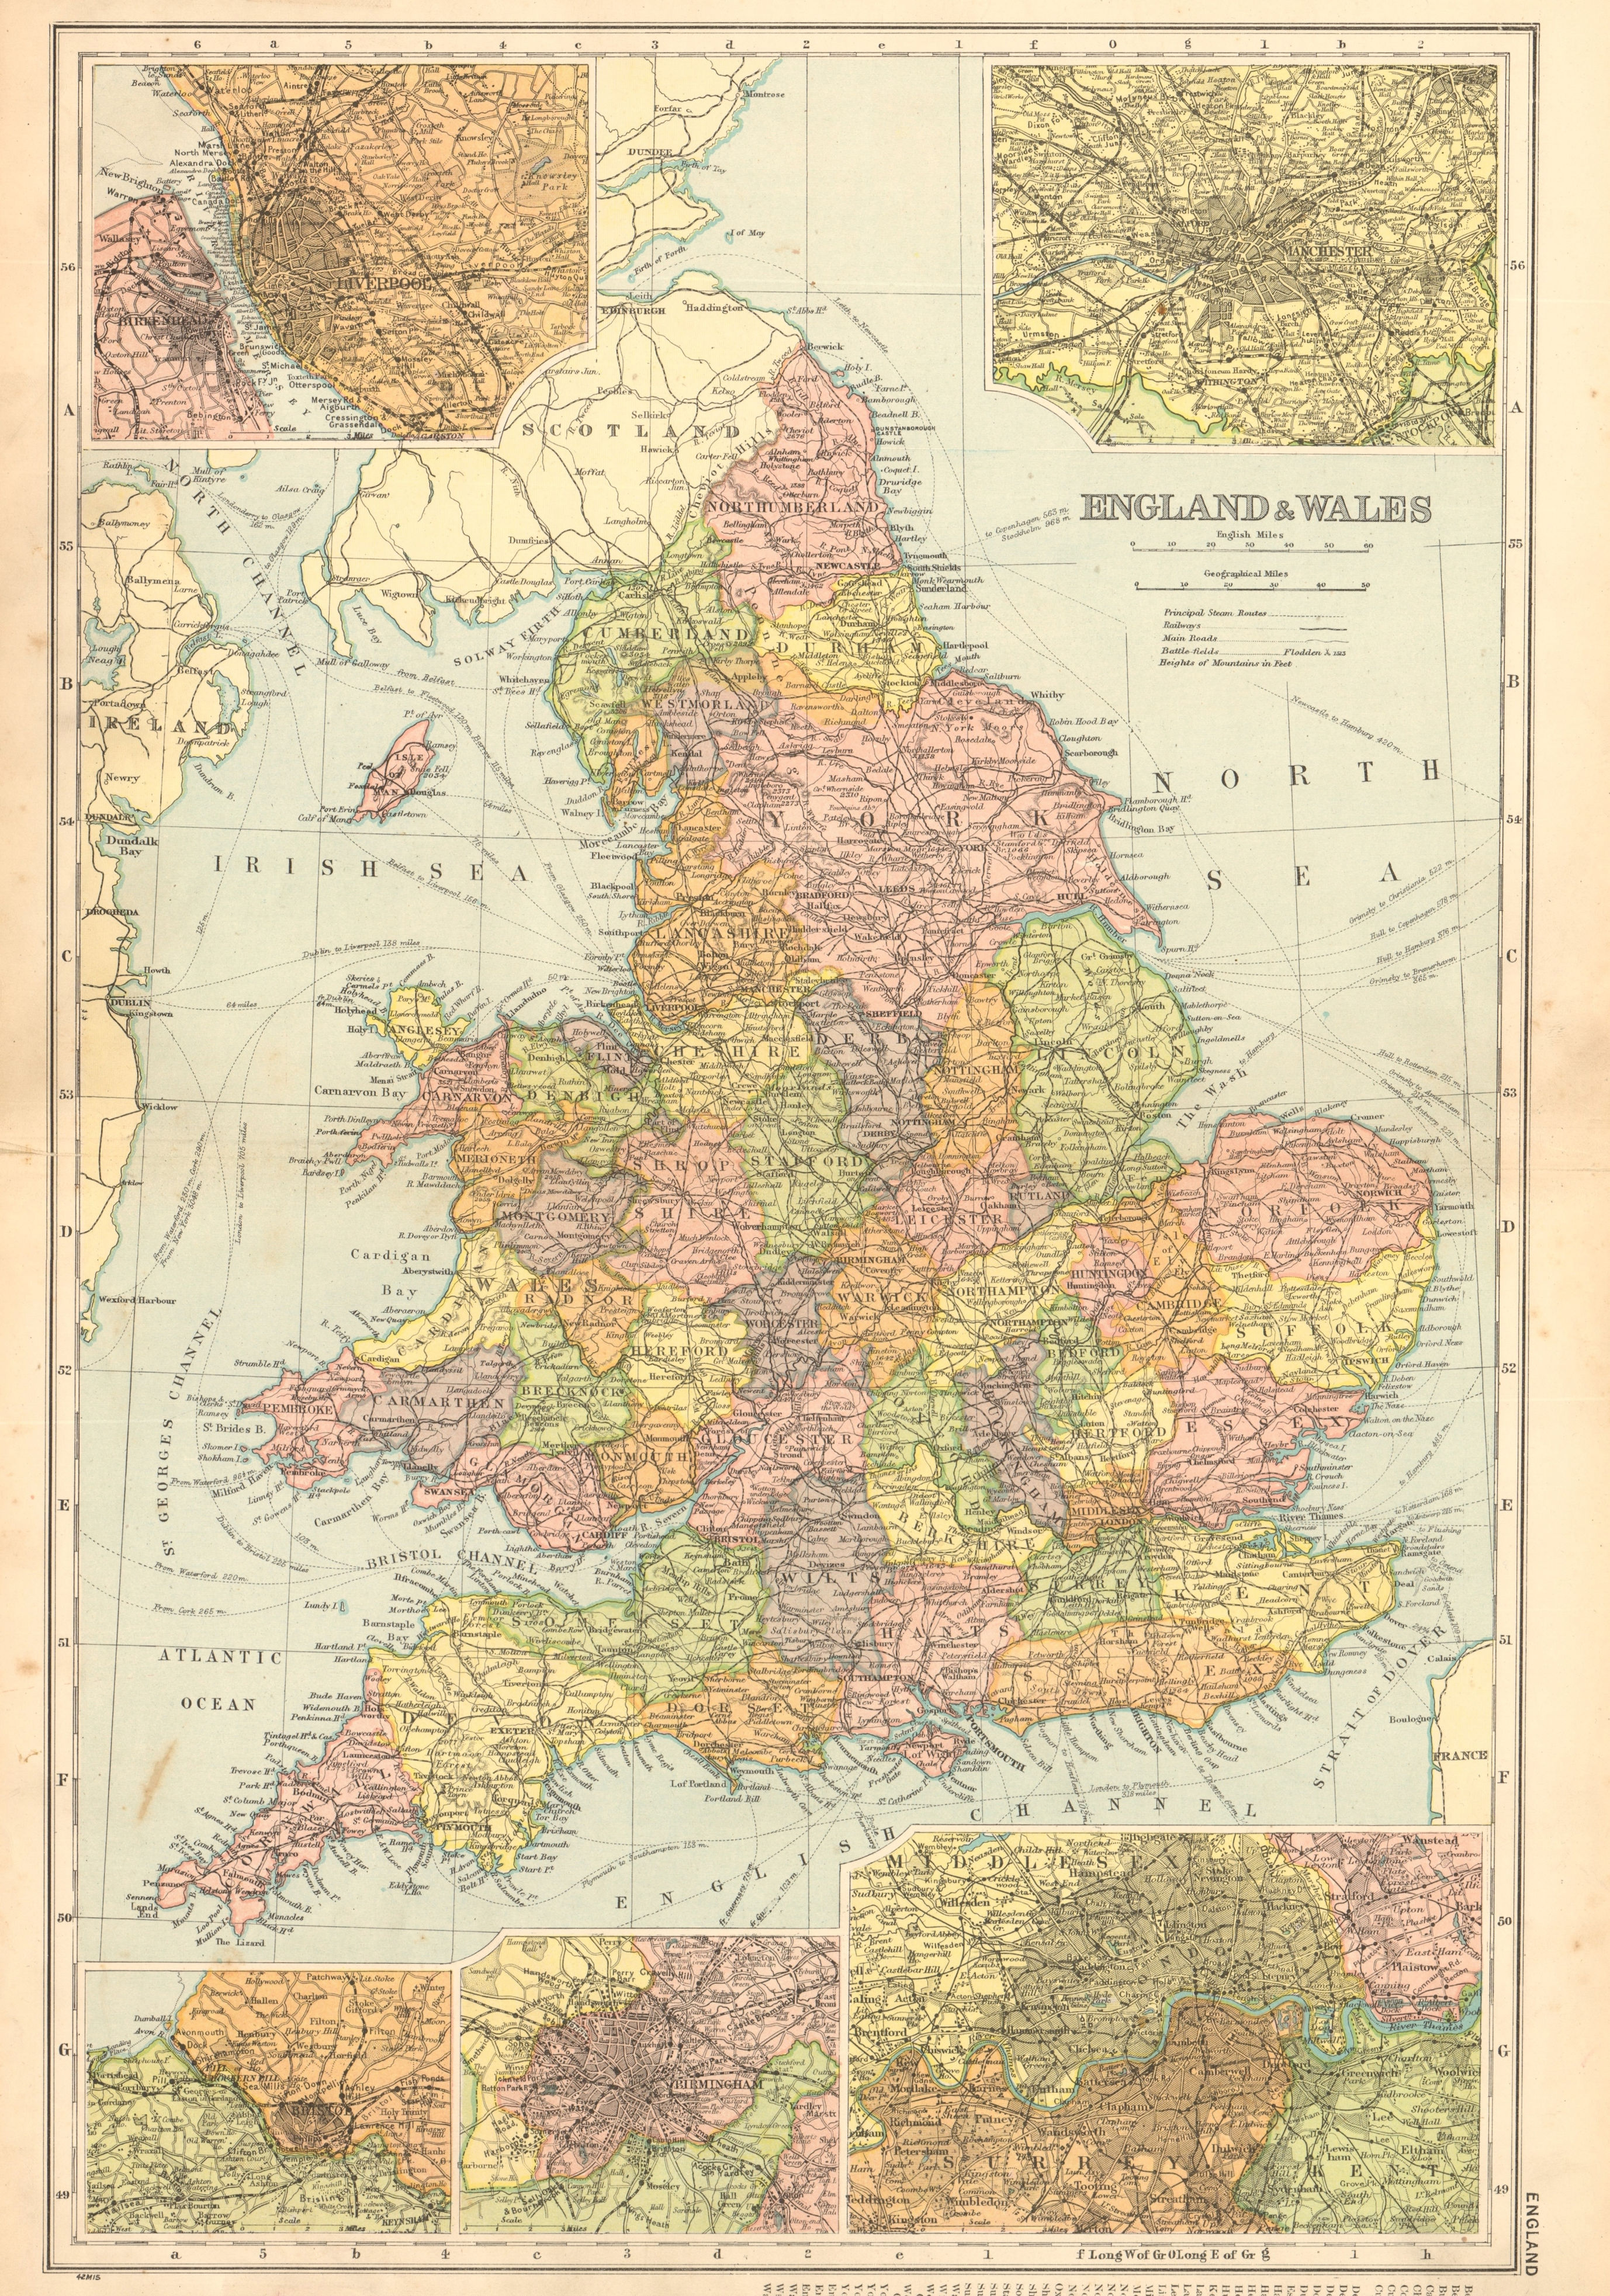 Associate Product ENGLAND & WALES. Liverpool Manchester Bristol Birmingham London. BACON 1904 map